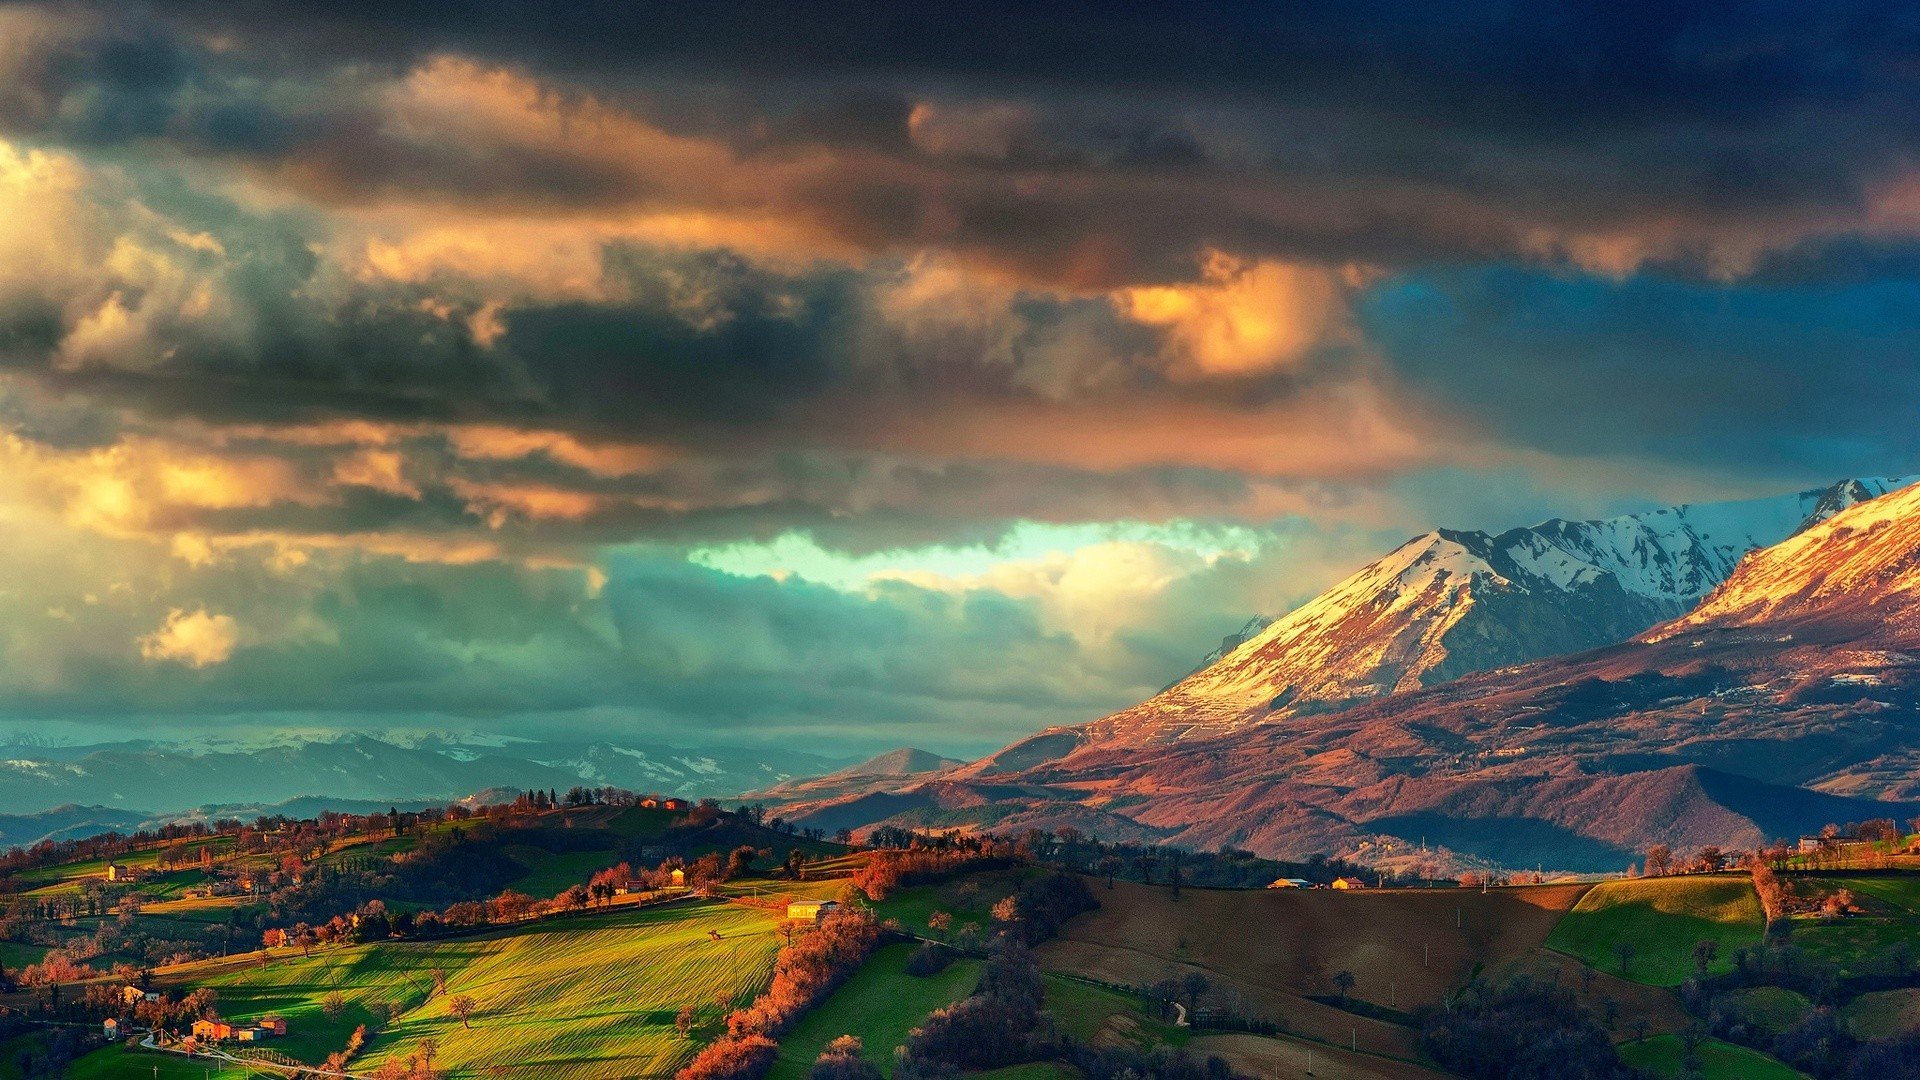 mountains, Field, Hills, Clouds, Blue, Orange, Green, Landscape, Valley, Galaxy Wallpaper